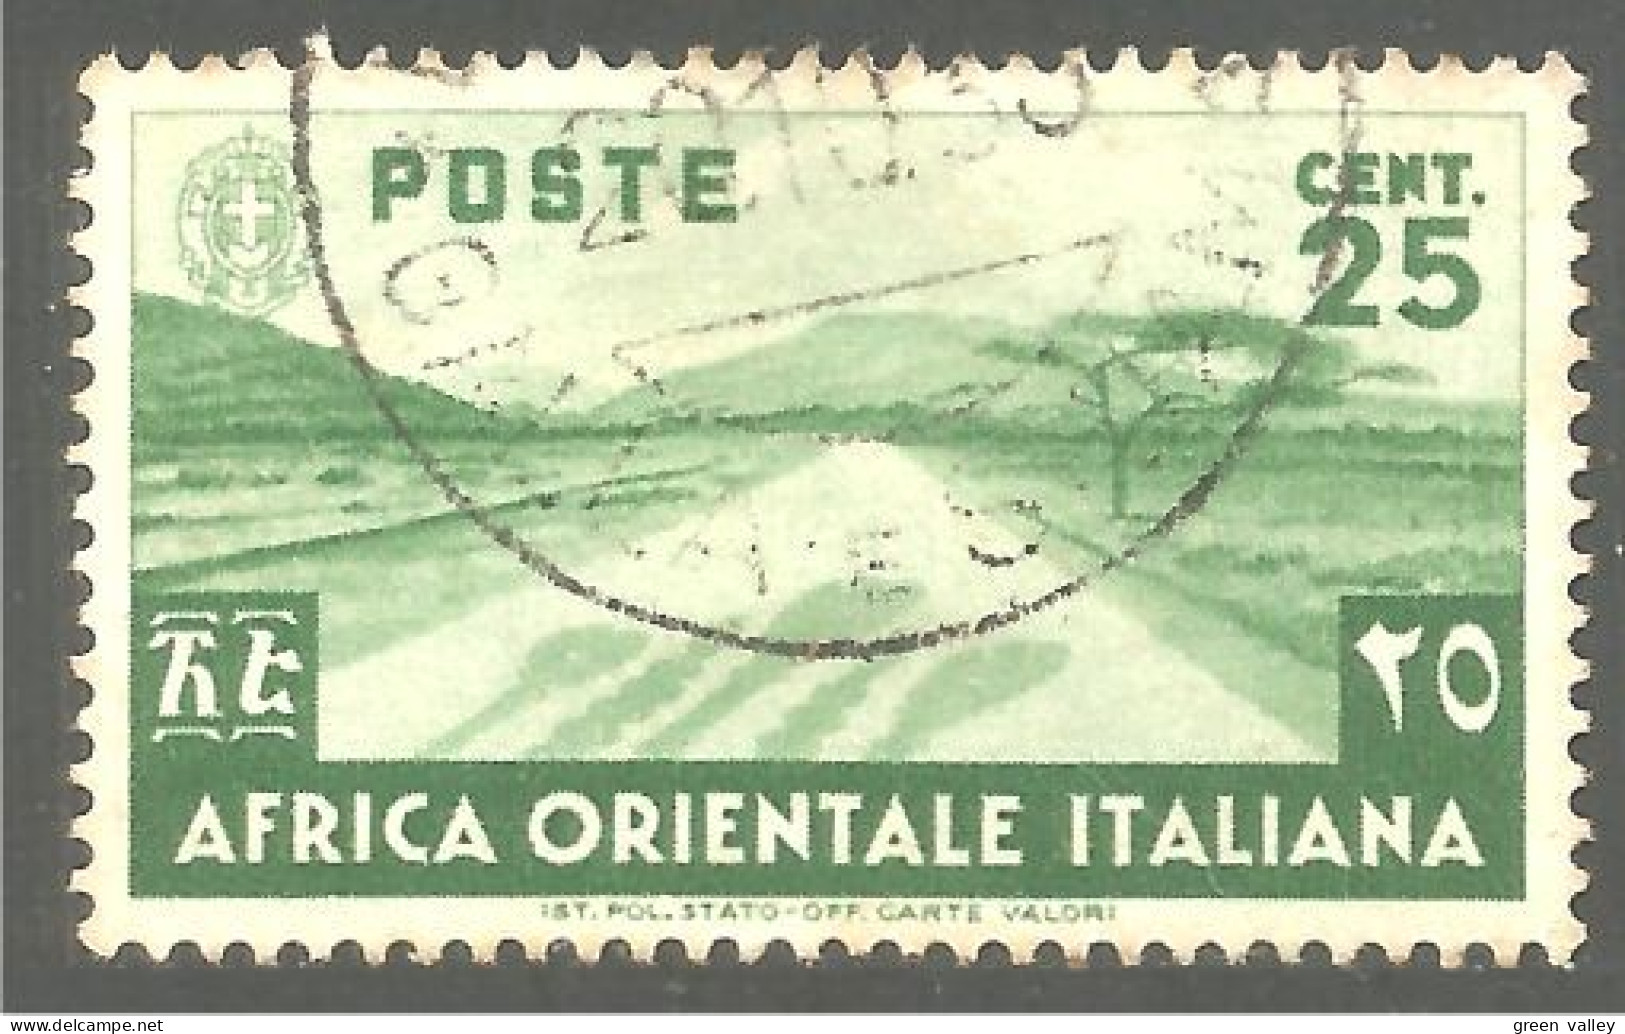 521 Africa Orientale Italiana 1938 Route Desert Road (ITC-148b) - Italian Eastern Africa